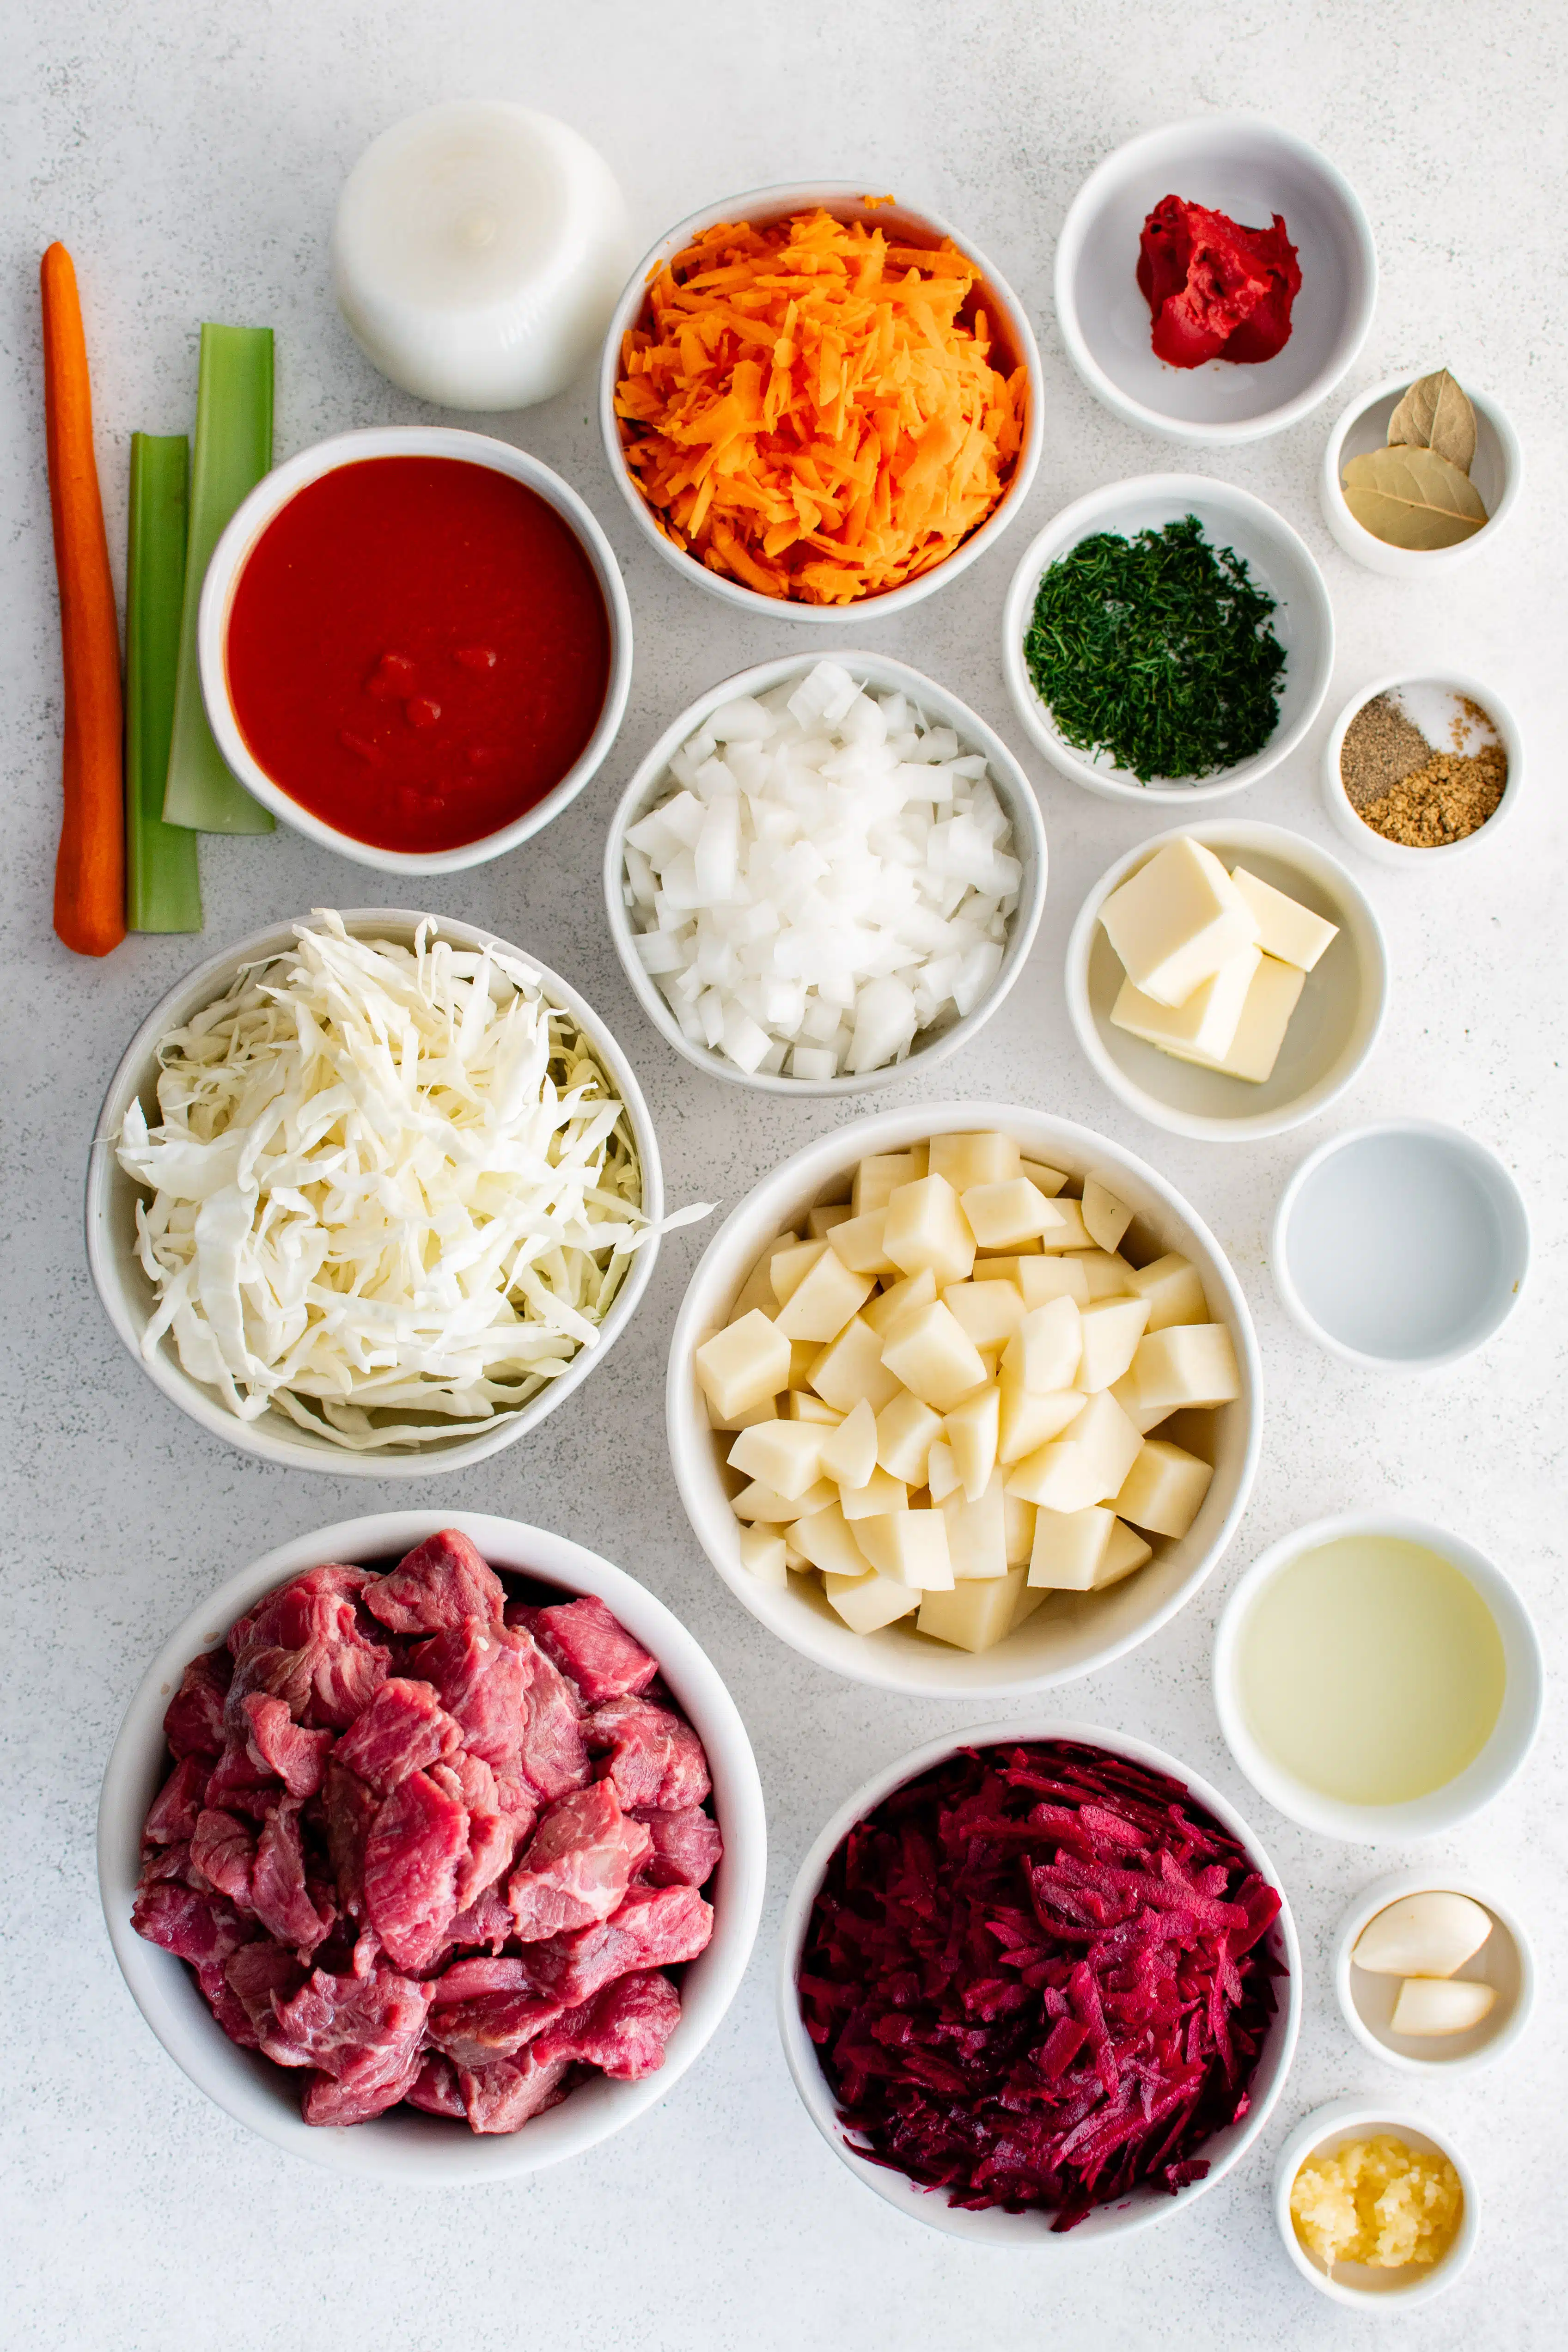 Ingredients needed to make traditional Ukrainian borscht soup in individual measuring cups and ramekins.